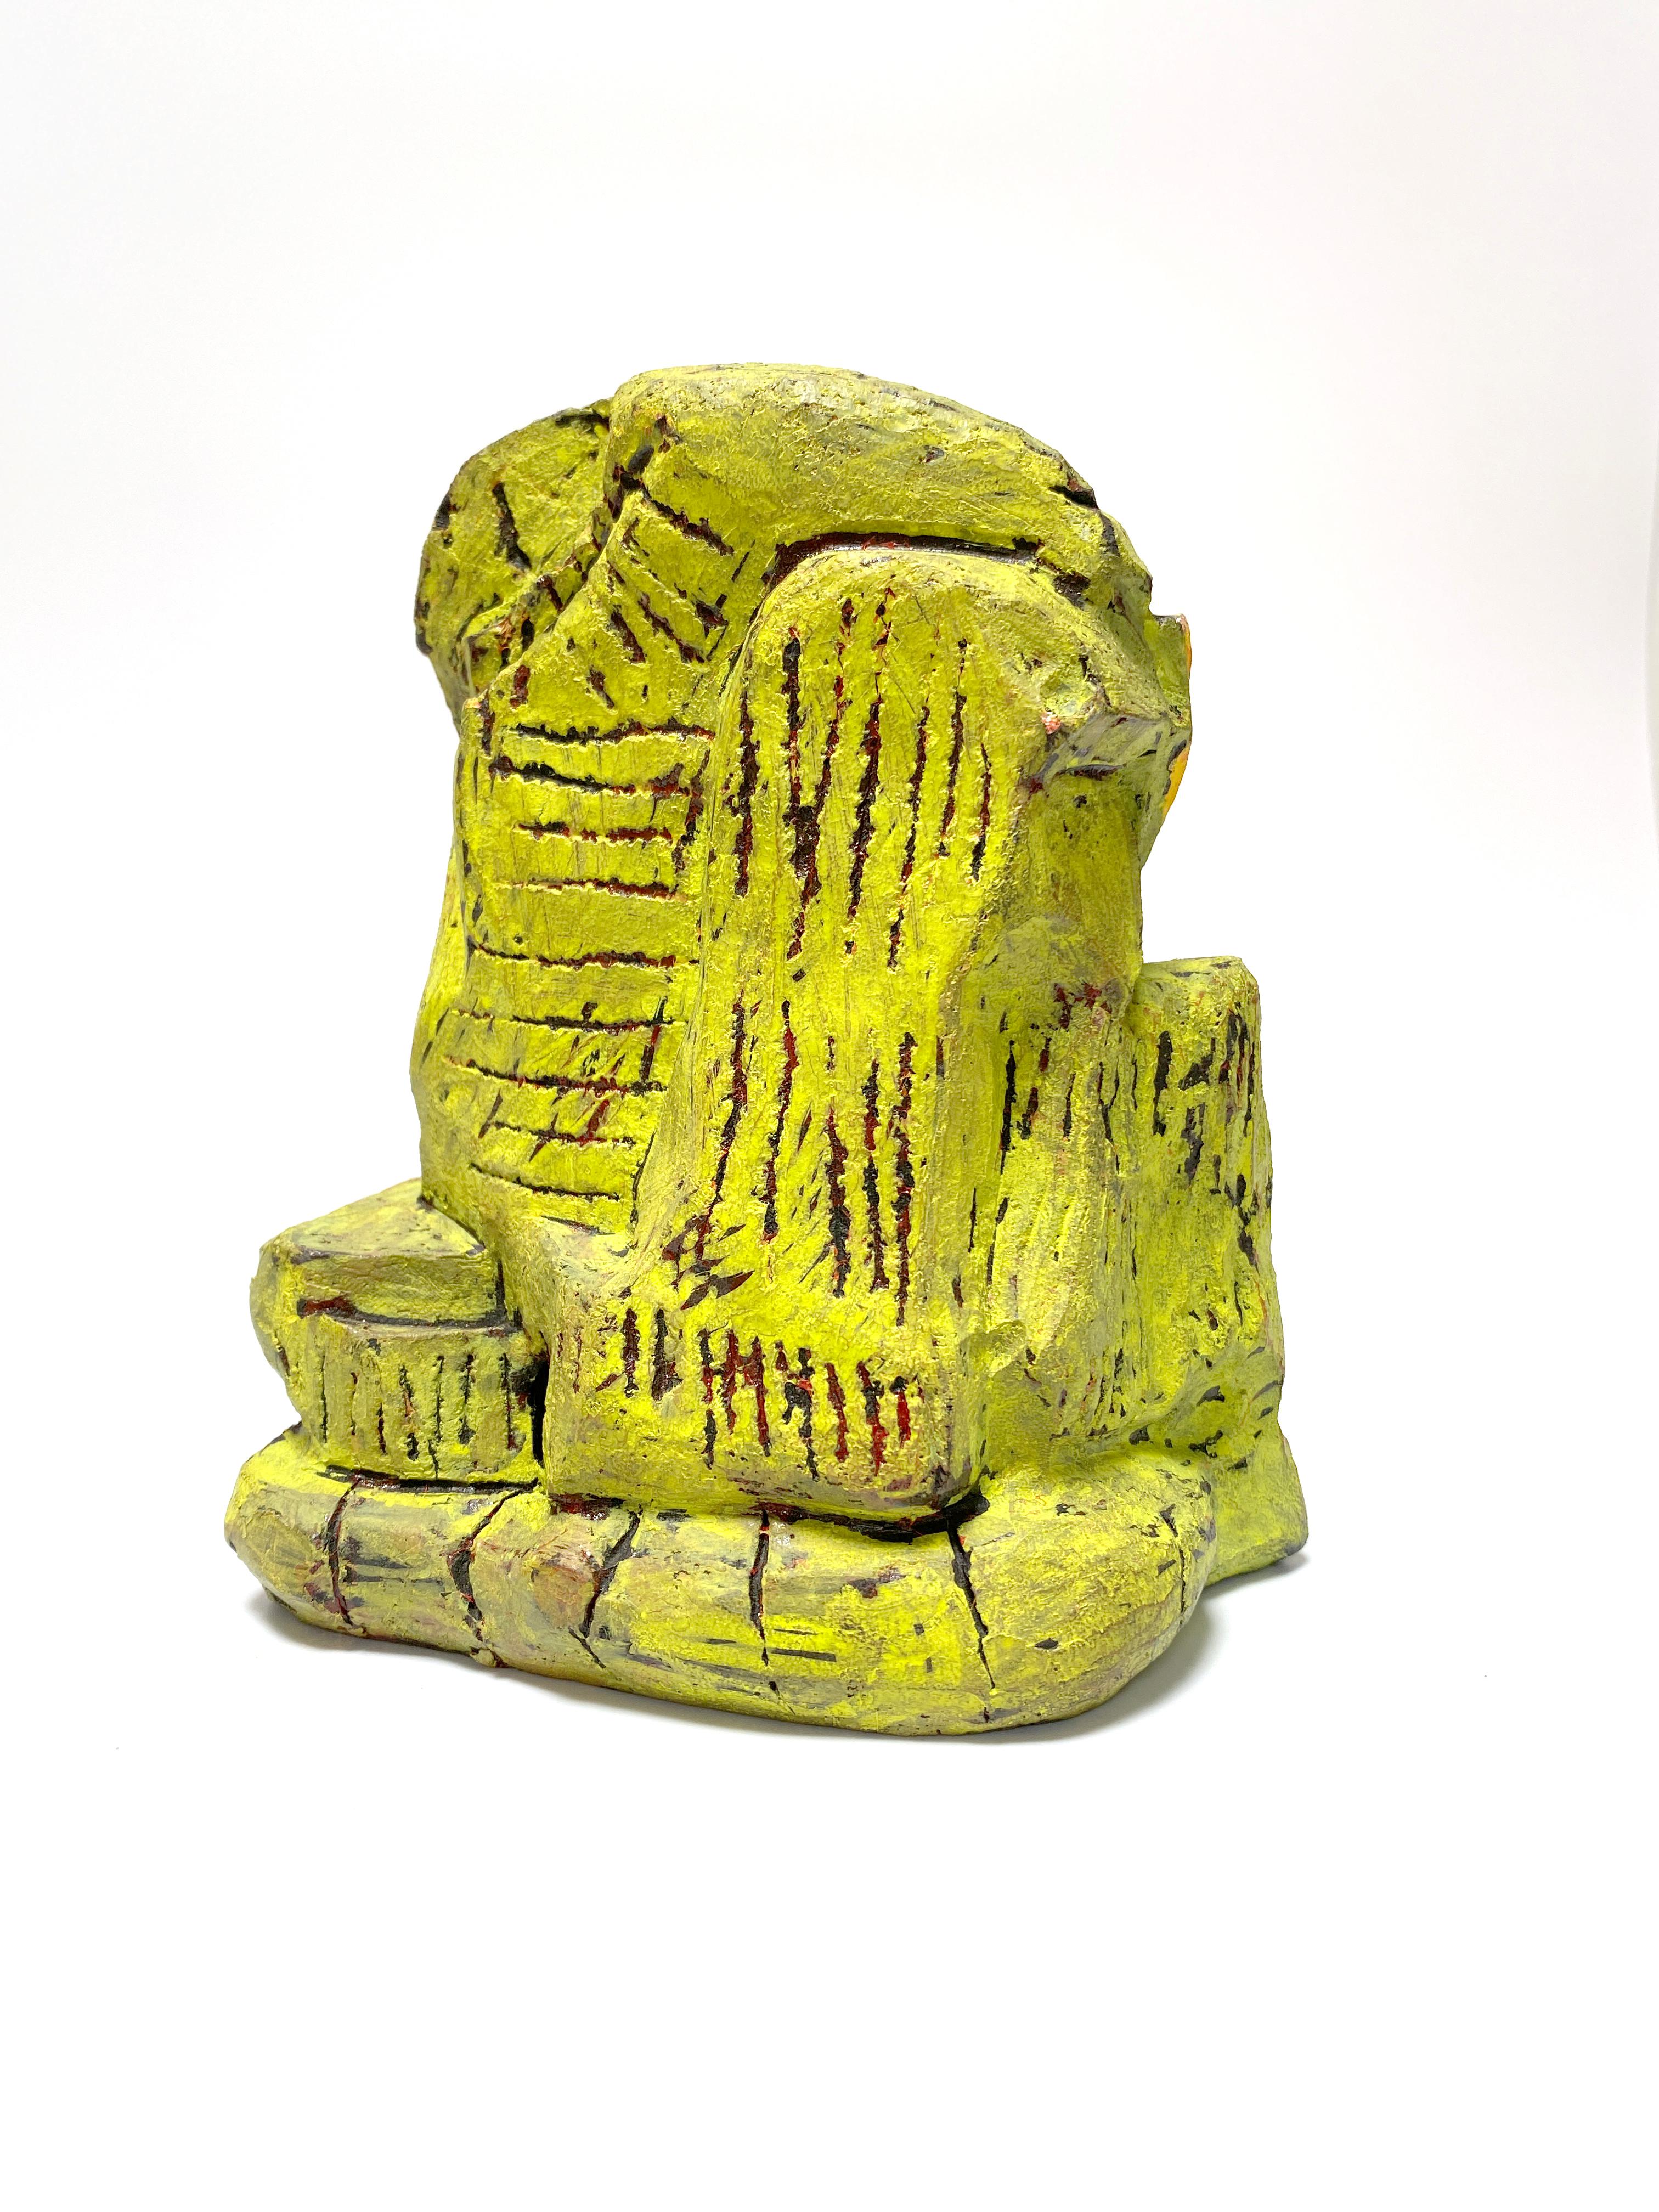 Justin Siegel, Untitled (Yellow), Ceramic, 2021 - Sculpture by Justin Siegel 